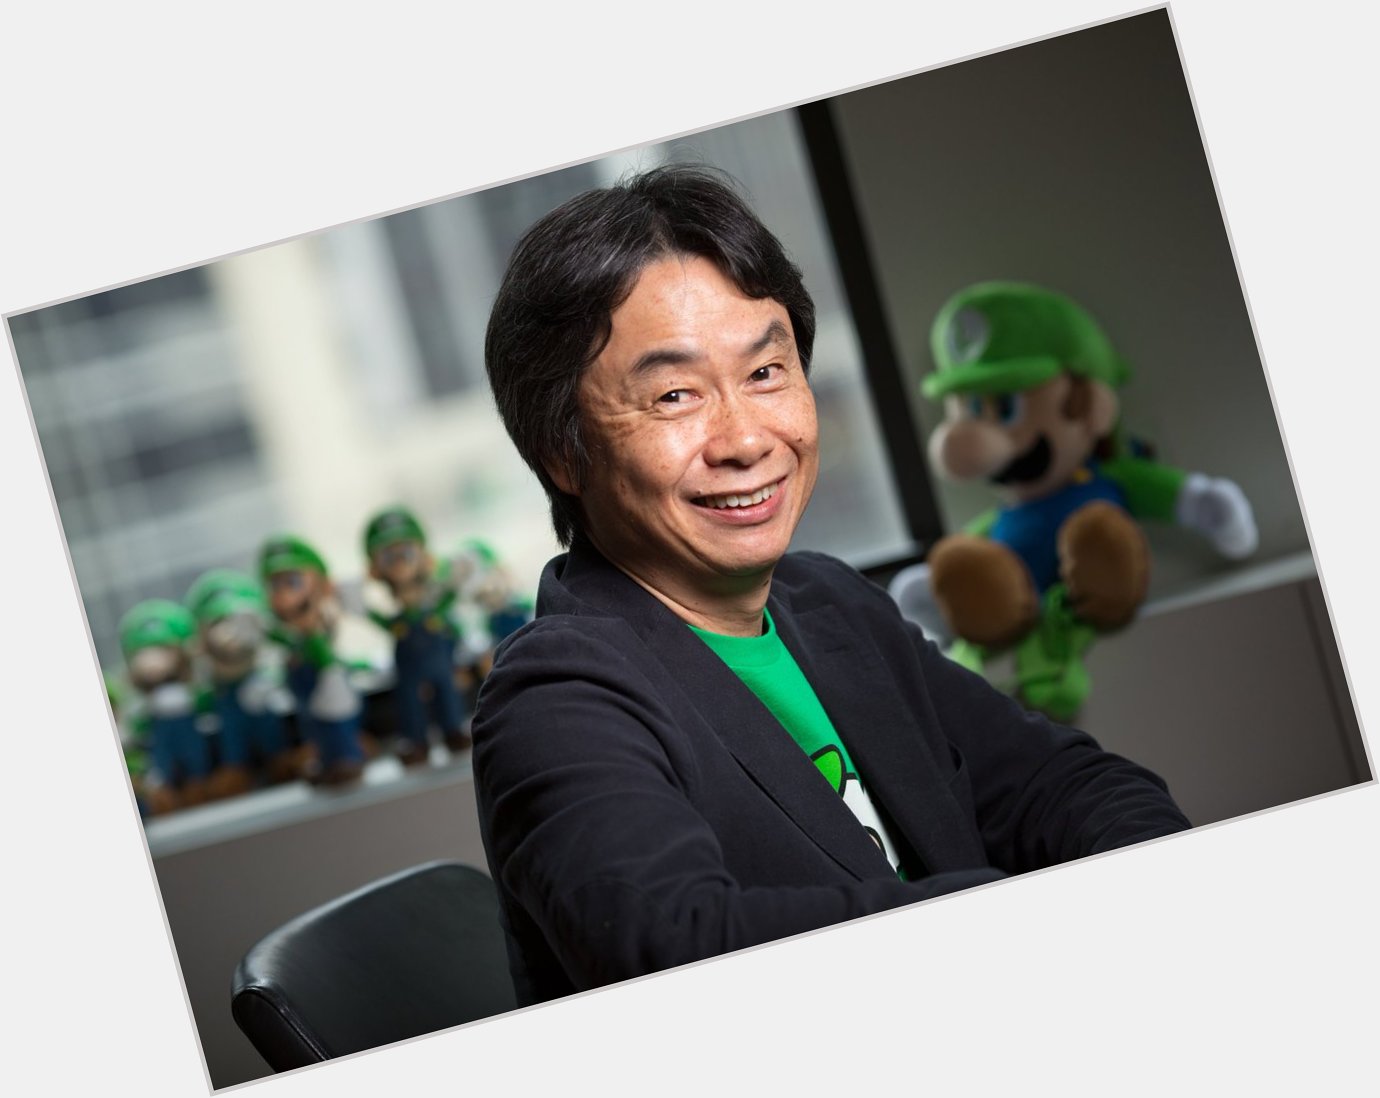 Happy Birthday Shigeru Miyamoto, and thank you for your inspiring games!  